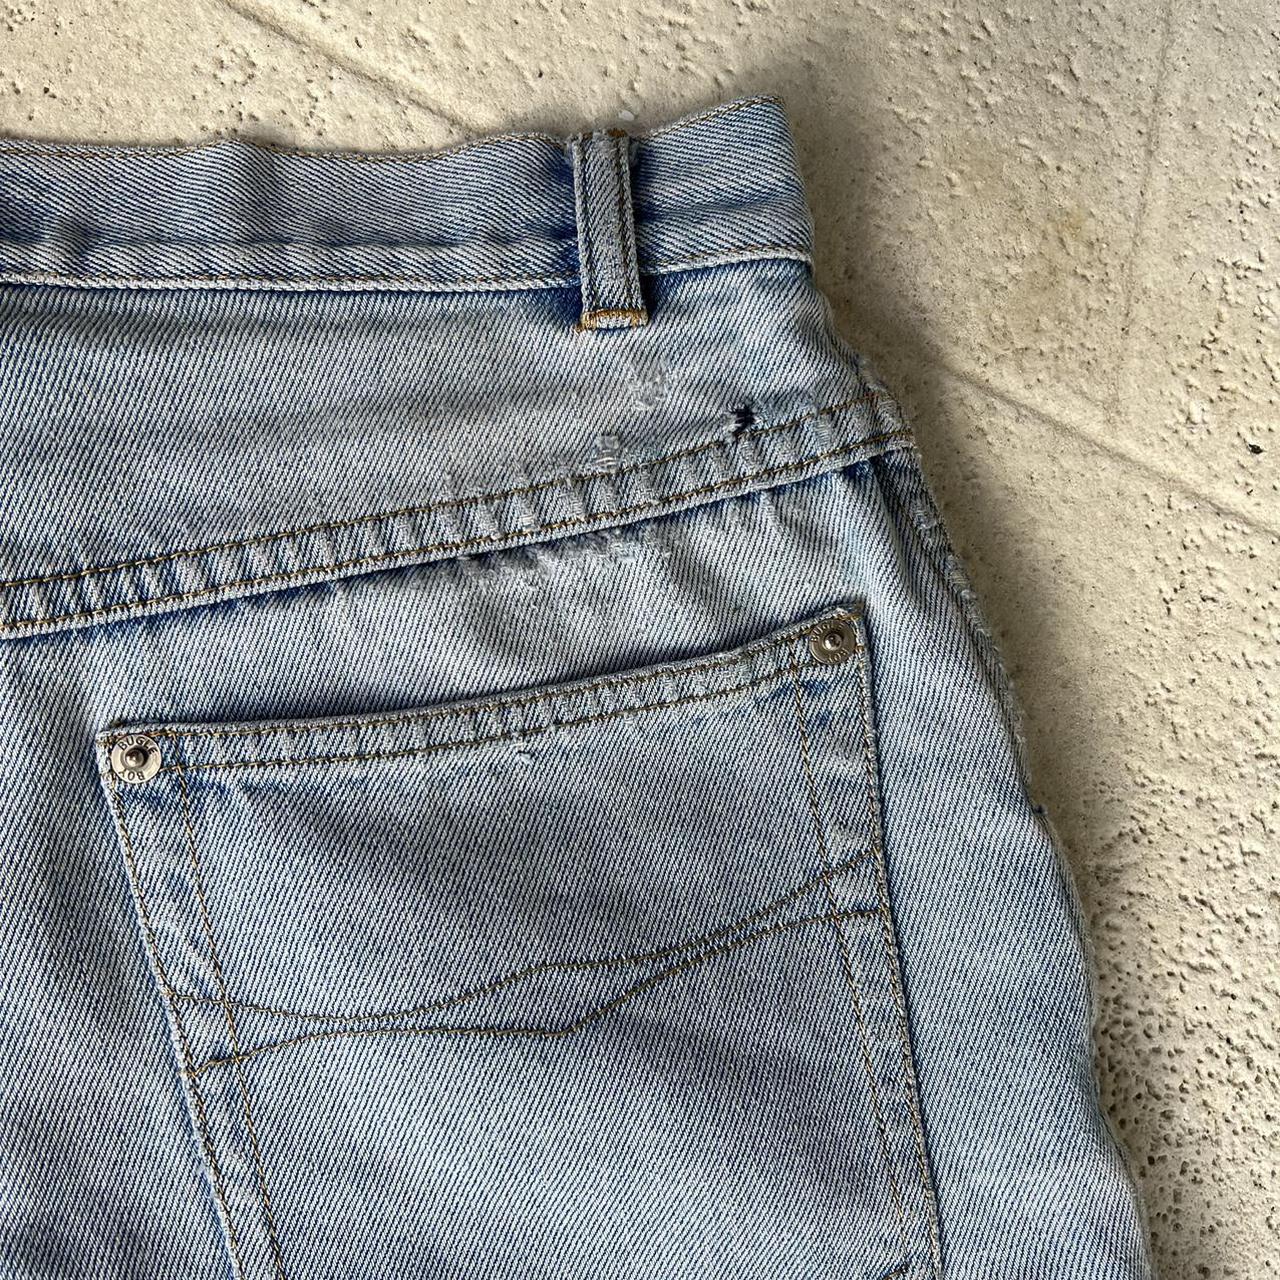 Product Image 3 - Long cut-off denim shorts. High